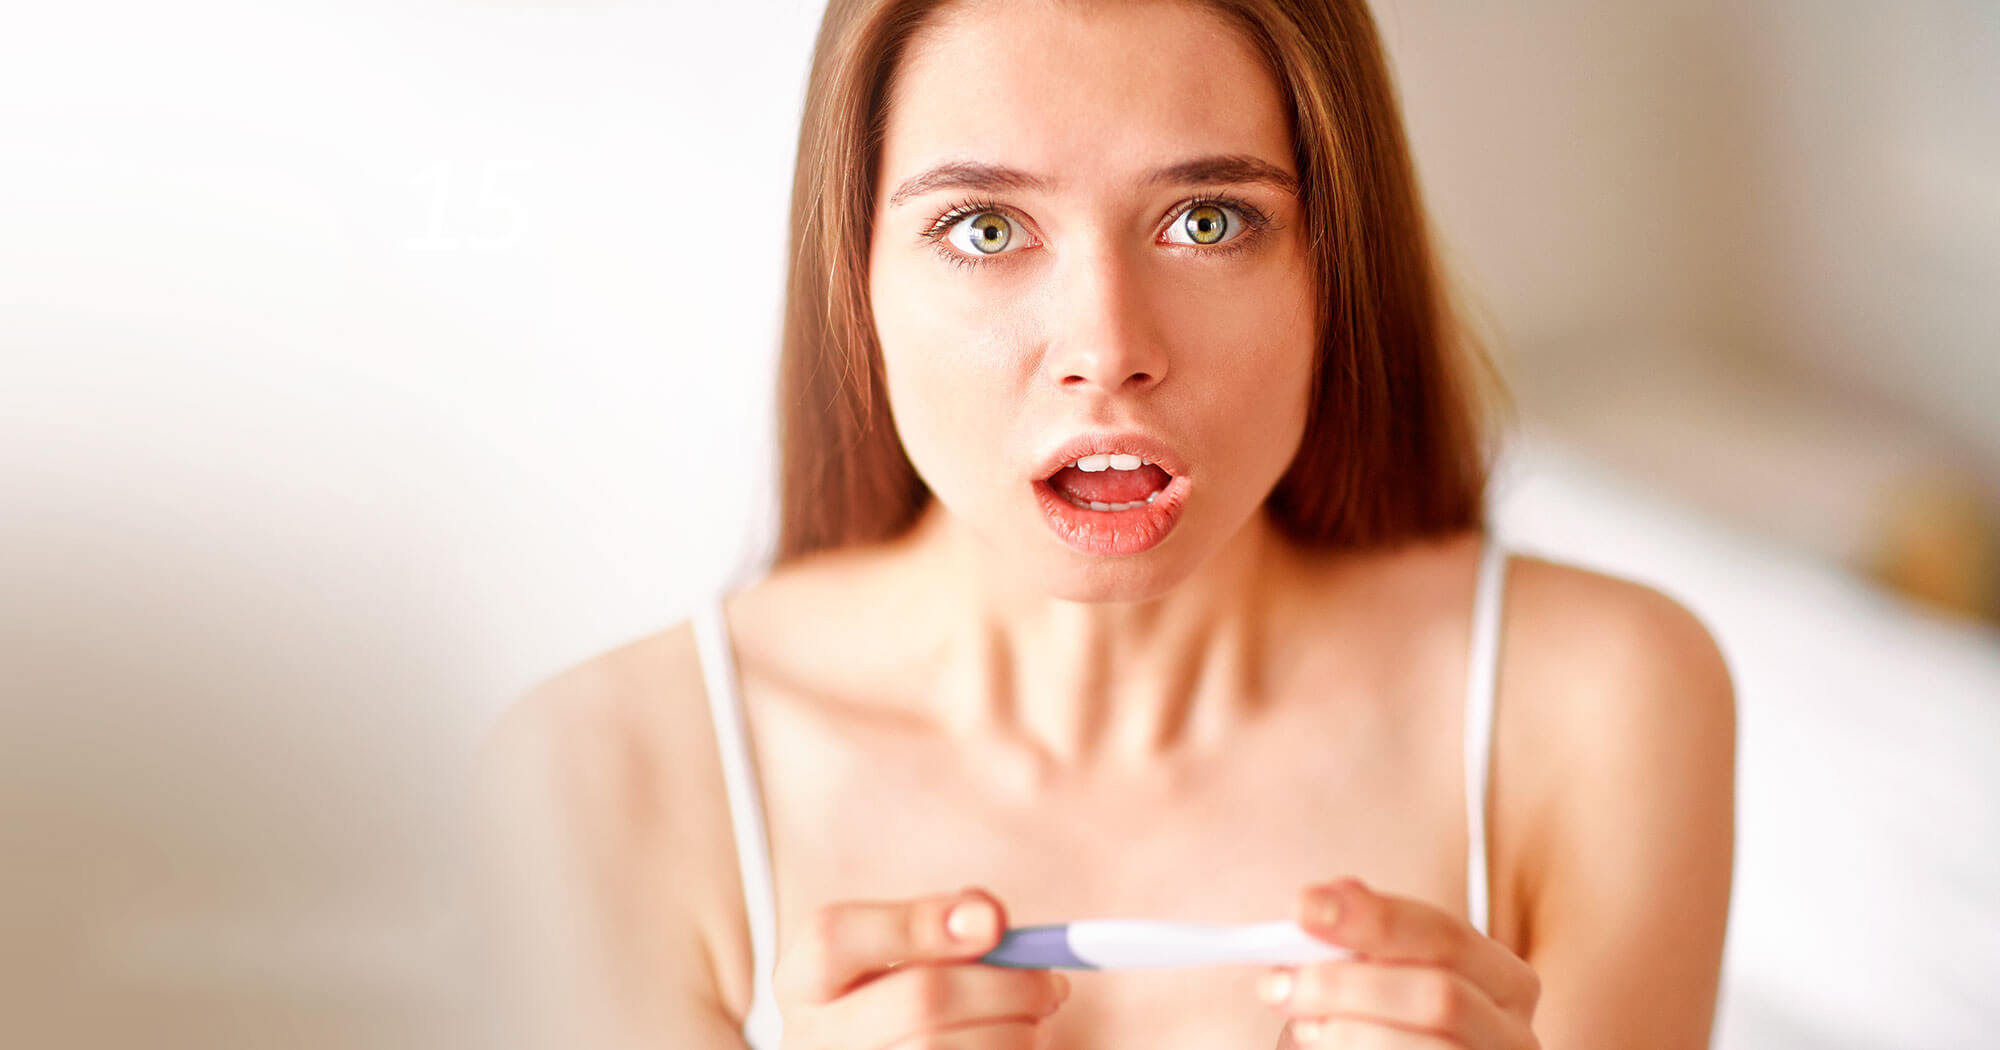 Signs of Pregnancy: The 15 Earliest & Weirdest Symptoms